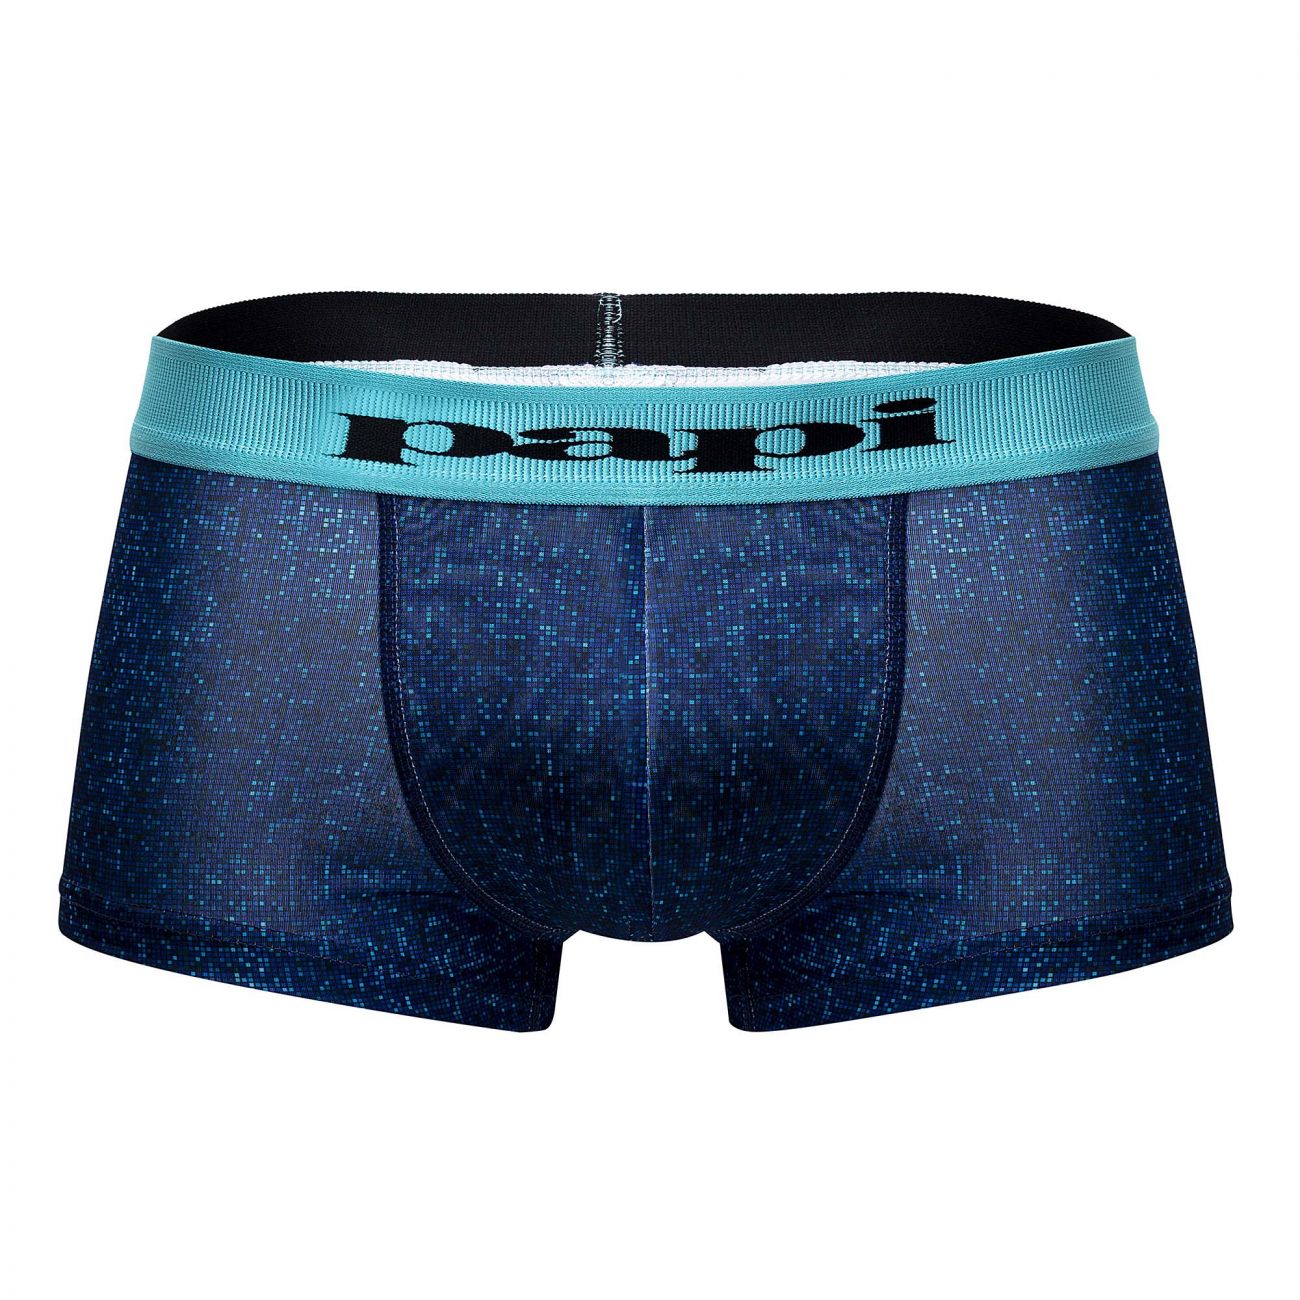 Papi UMPA050 Fashion Microflex Brazilian Trunks Blue Pixel Print